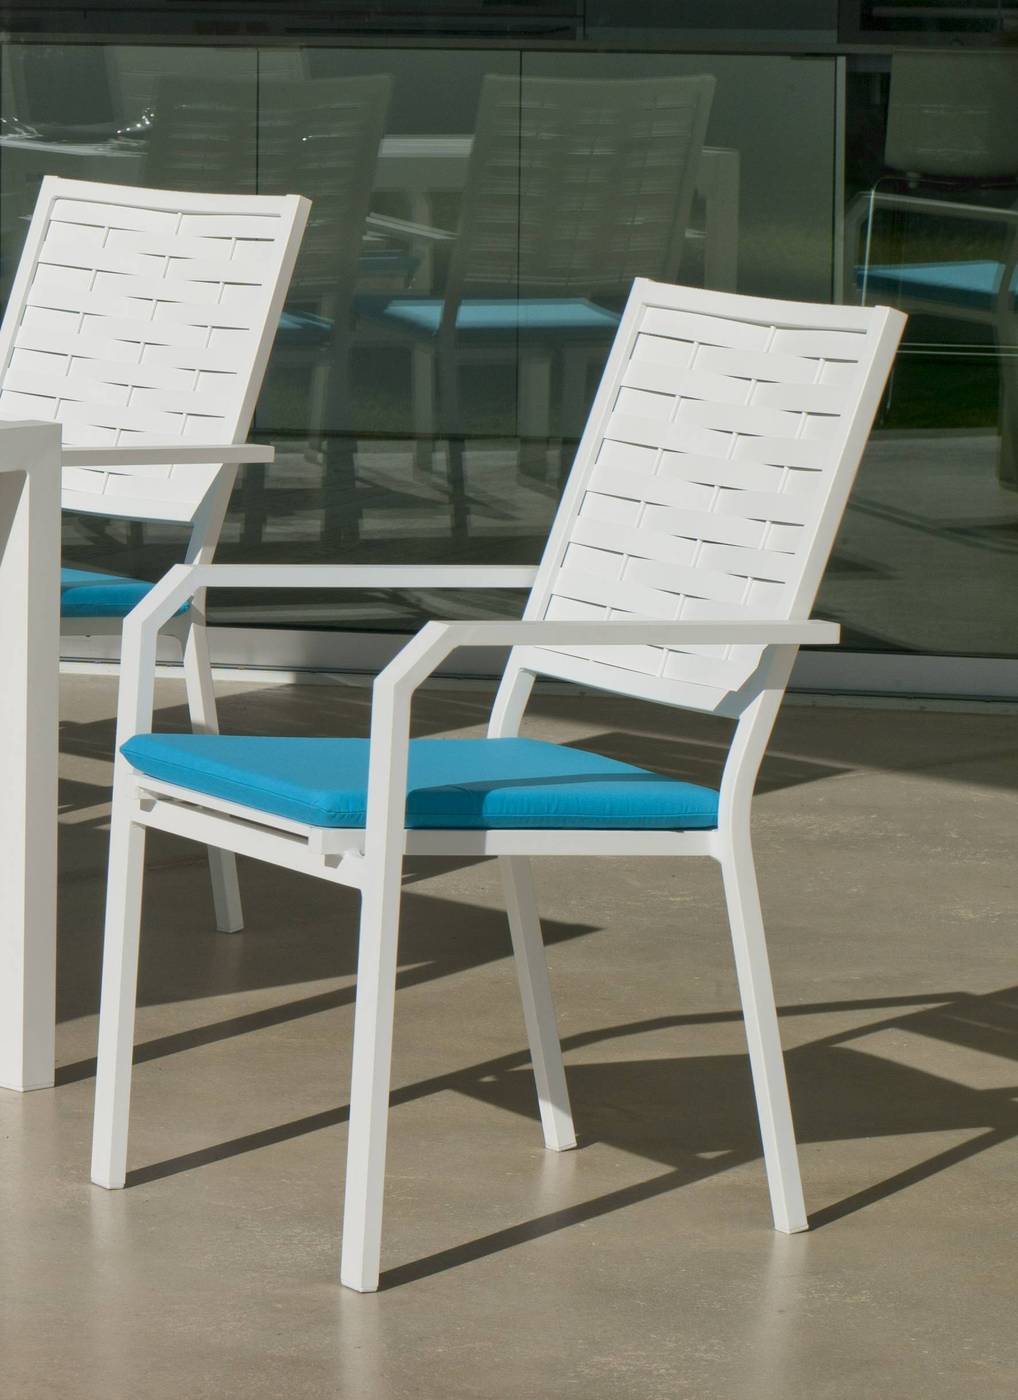 Set Aluminio Palma-Augusta 150-4 - Conjunto de aluminio luxe para jardín o terraza: Mesa rectangular 150 cm. + 4 sillones. Disponible en color blanco, bronce, antracita y champagne.